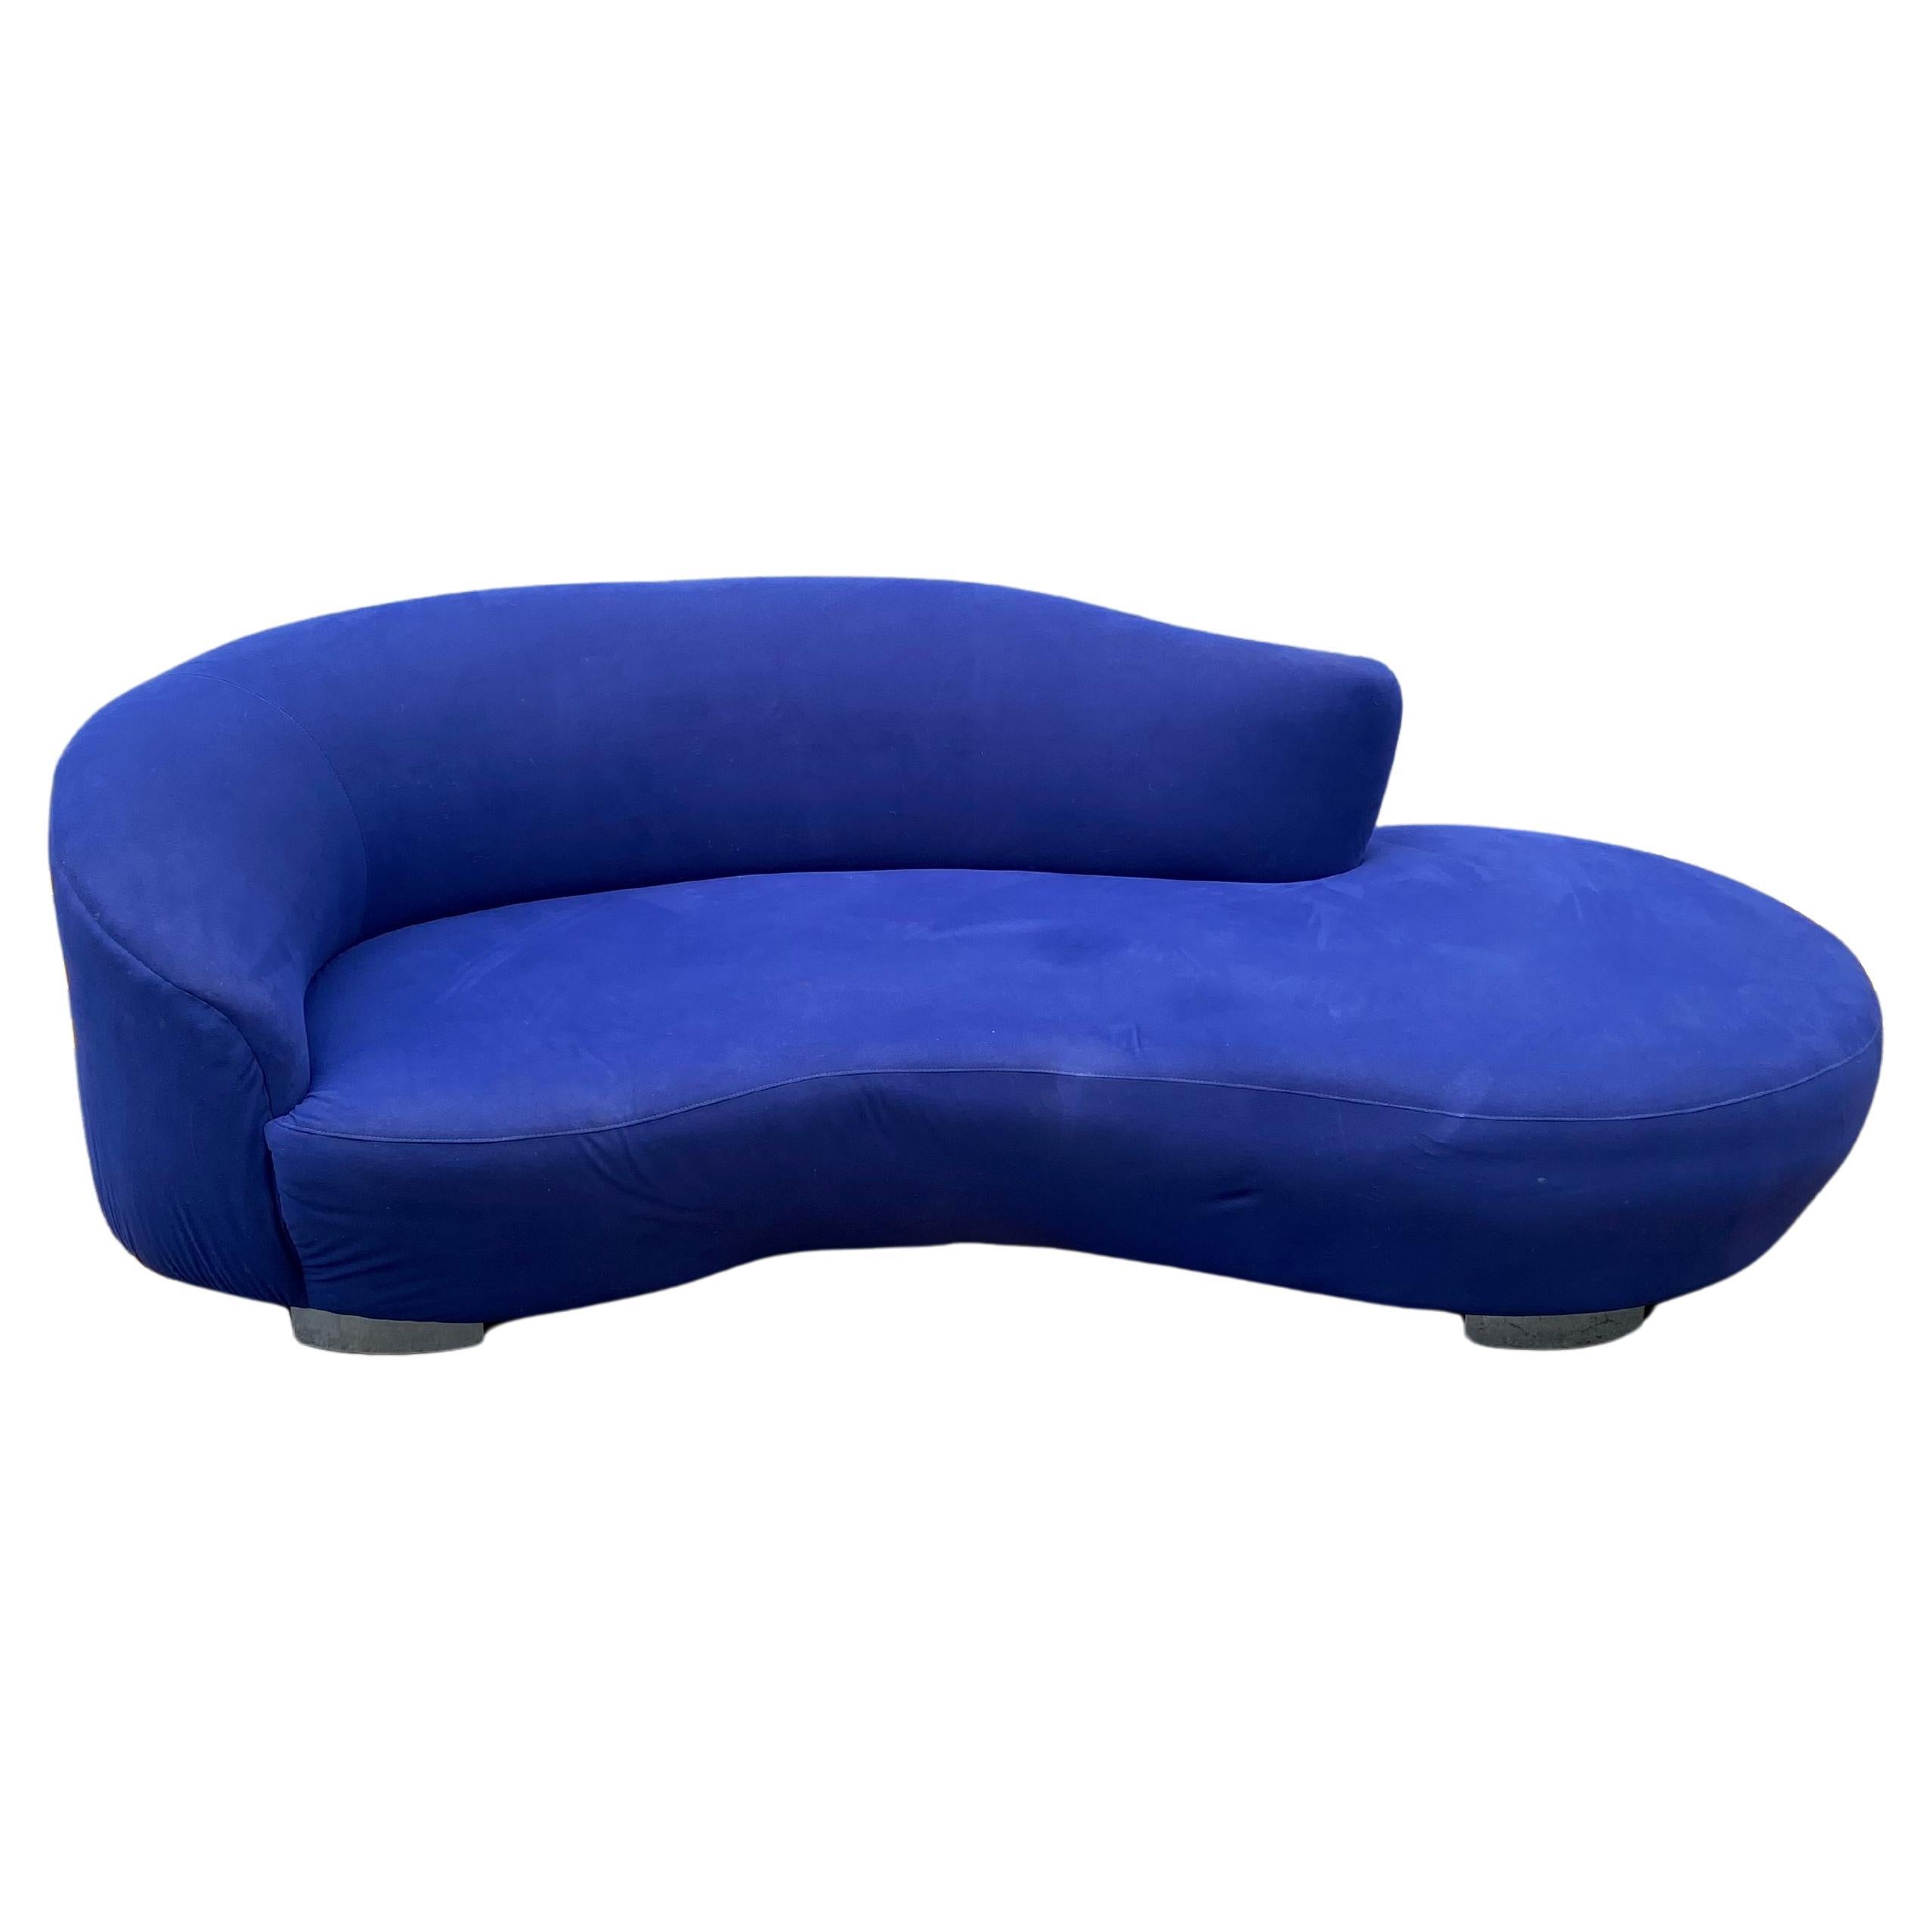 1990s Weiman Royal Blue Cloud Serpentine Sofa For Sale